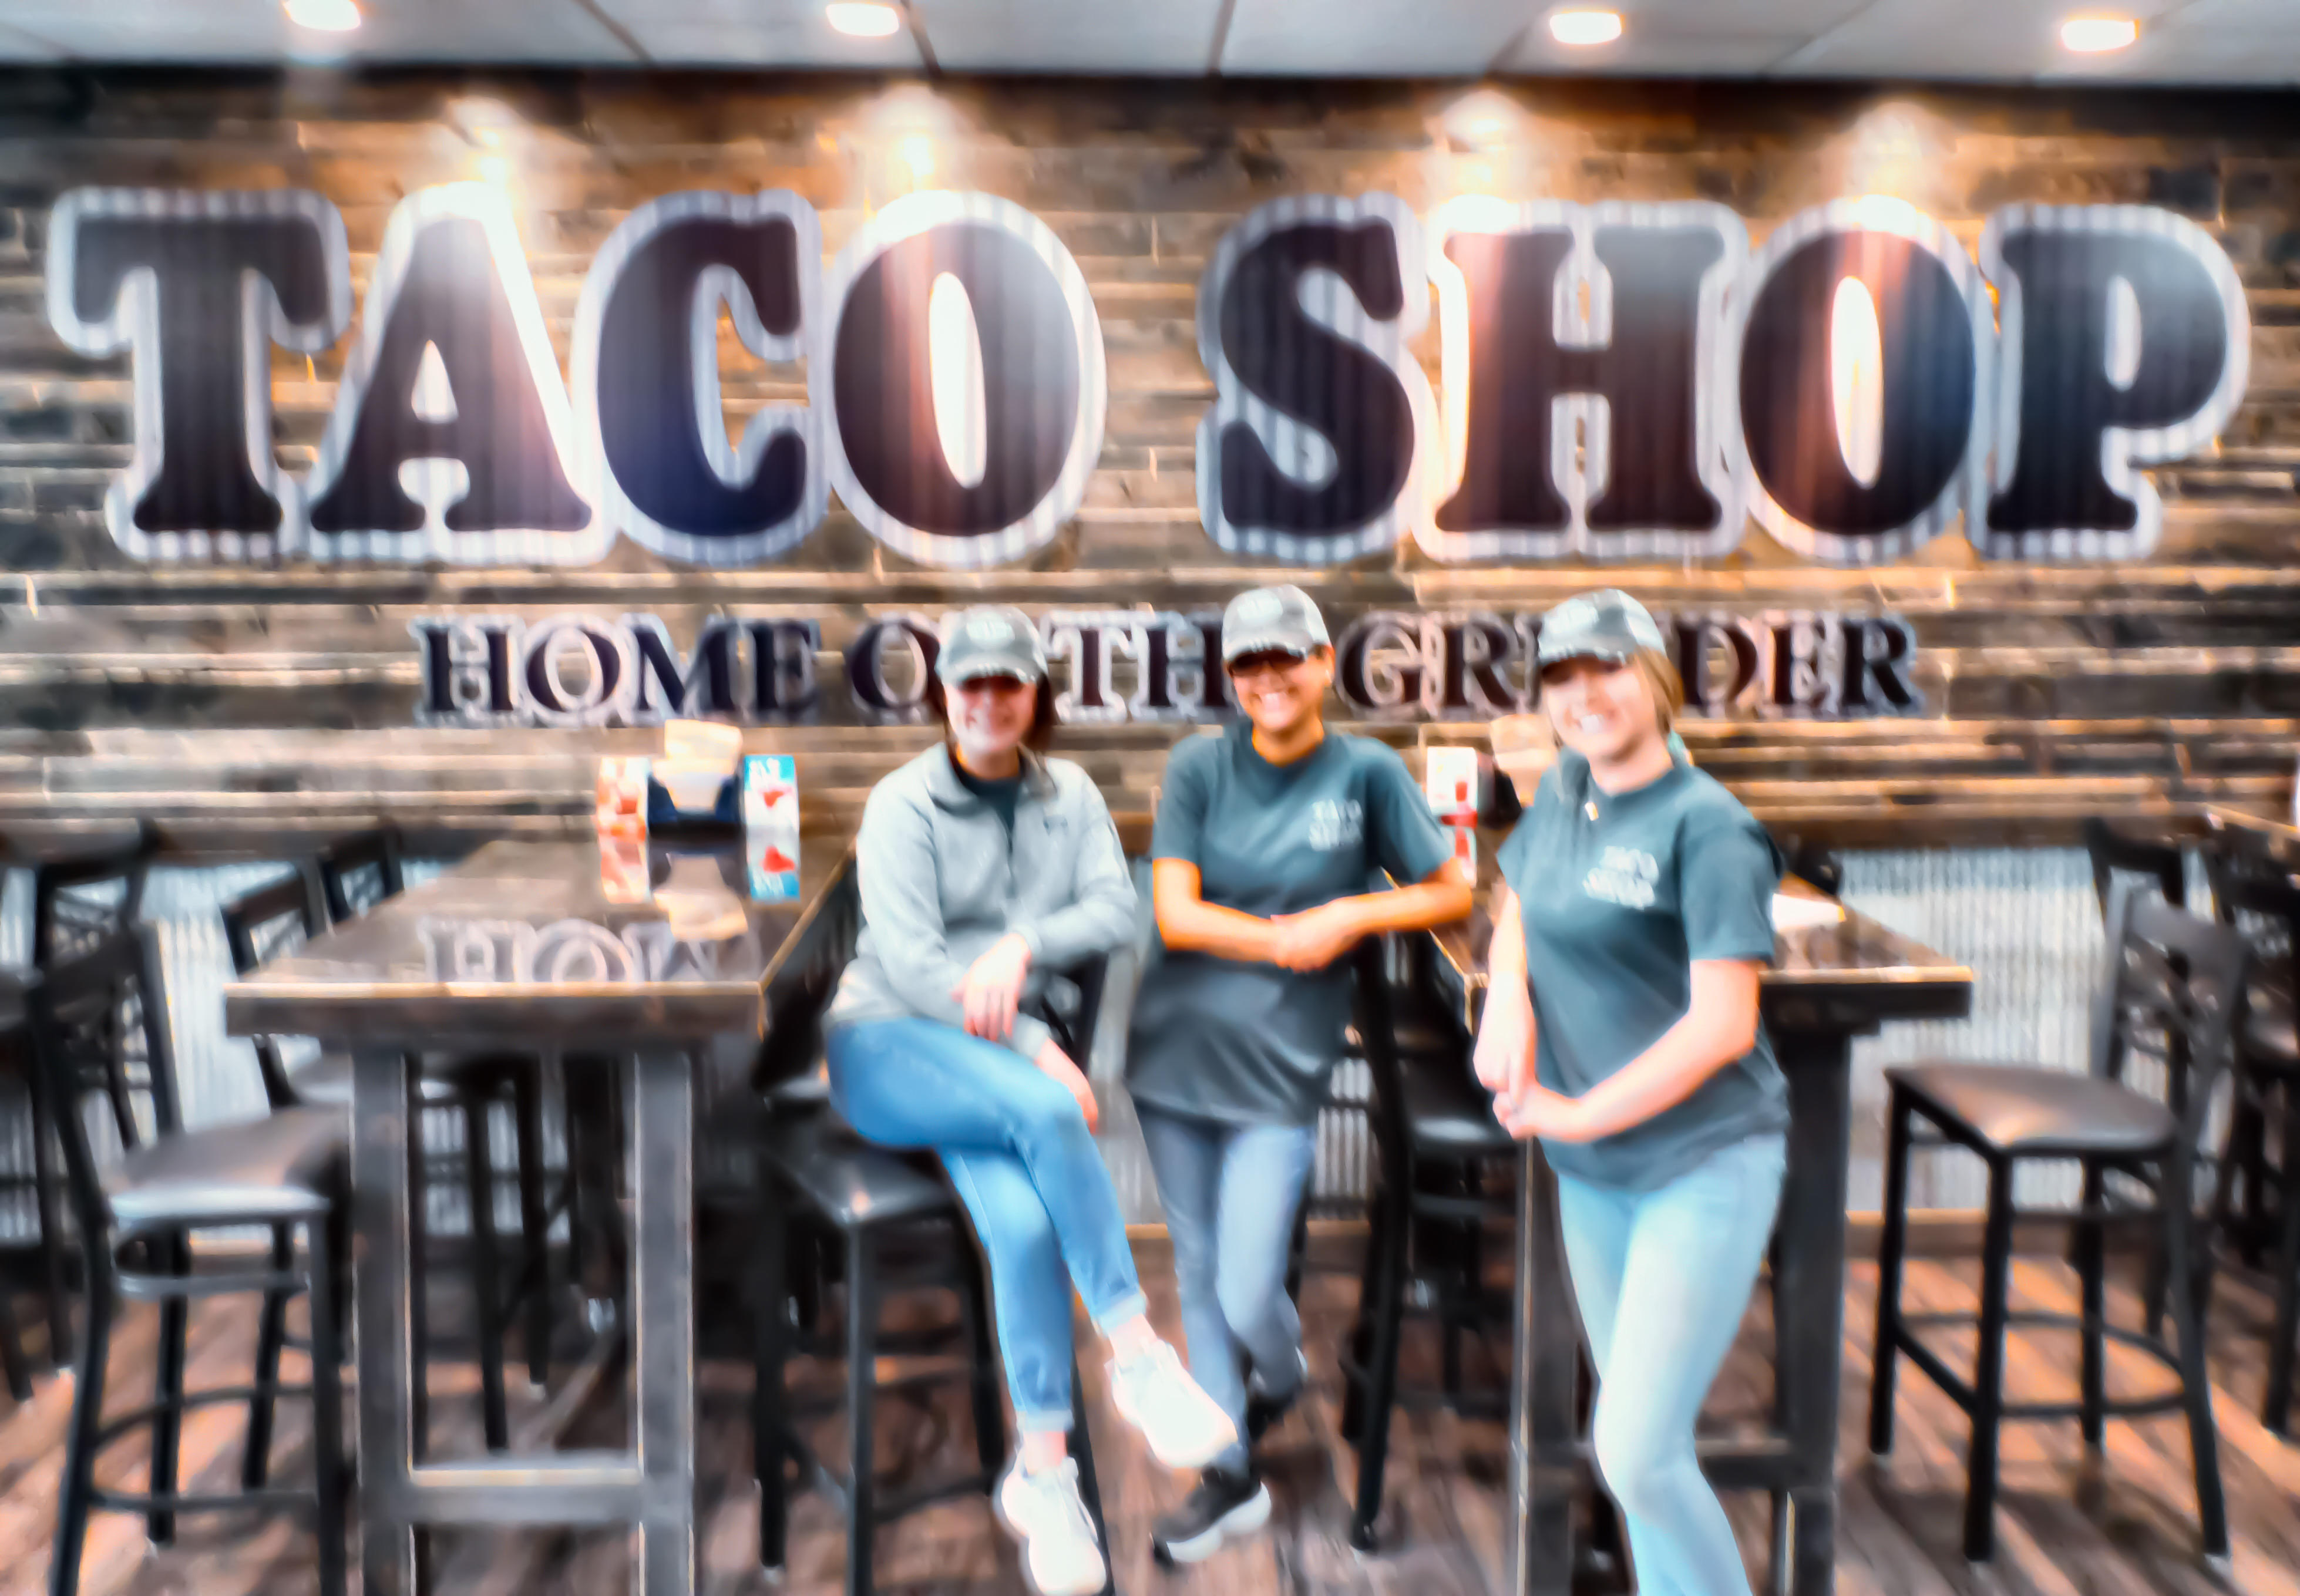 Taco Shop Photo